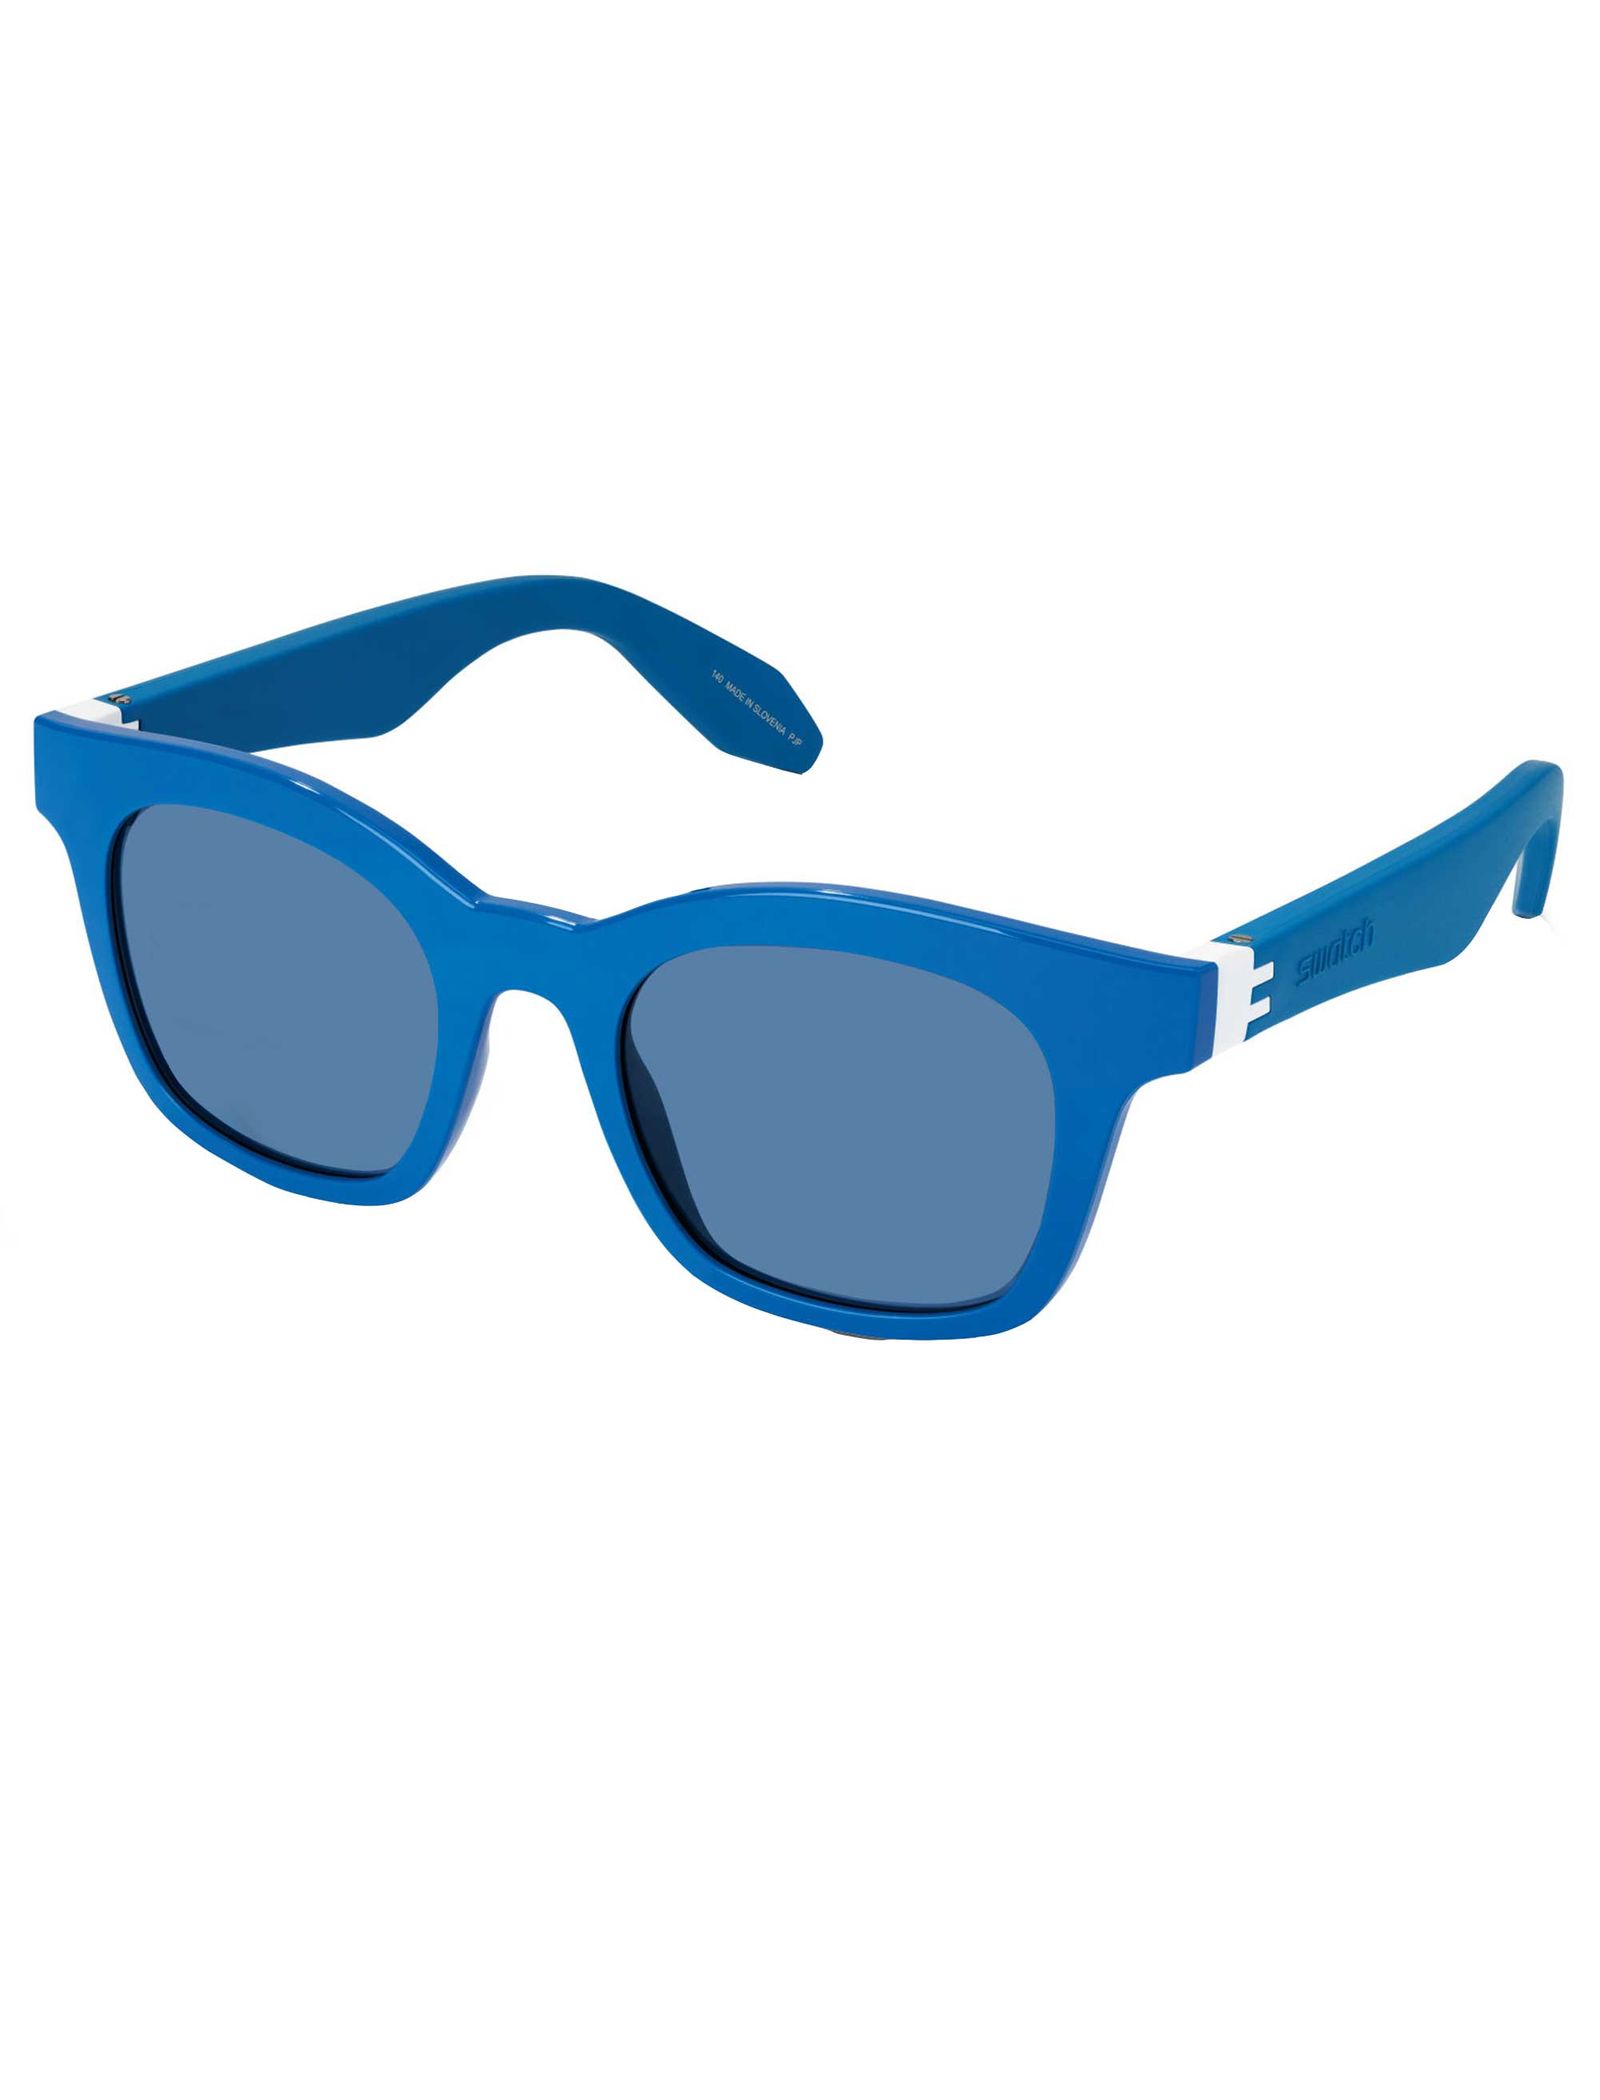 عینک آفتابی سواچ مدل SES02SMN024 - آبی - 3